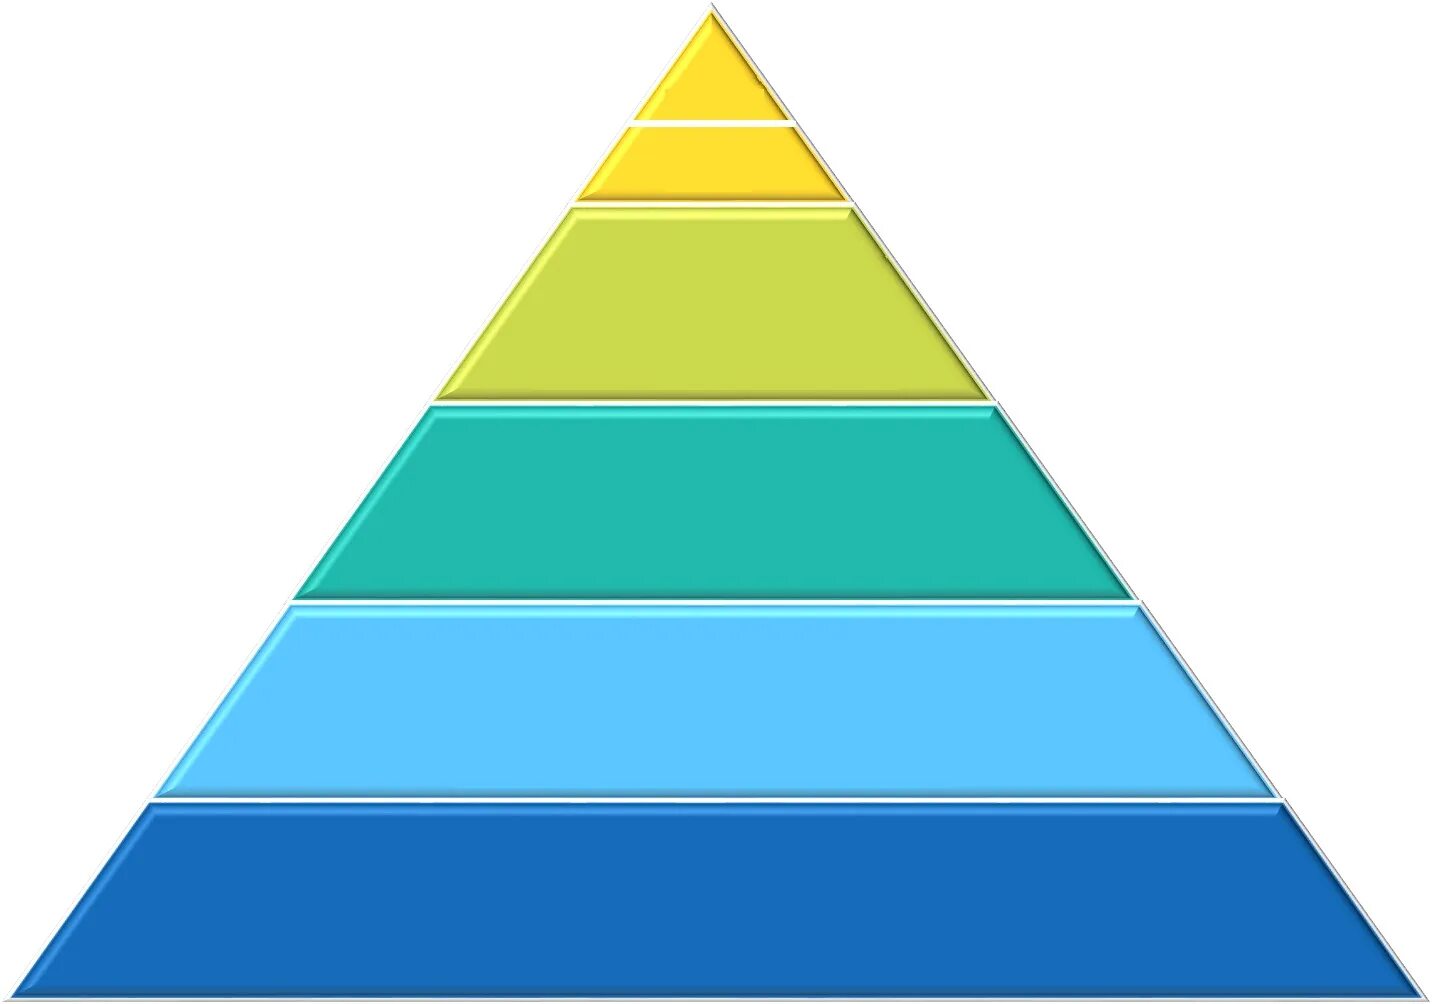 Пирамида 1 16. Пирамида Фламгольца. Треугольник из 5 уровней. Треугольная пирамида. Пирамида из пяти уровней.